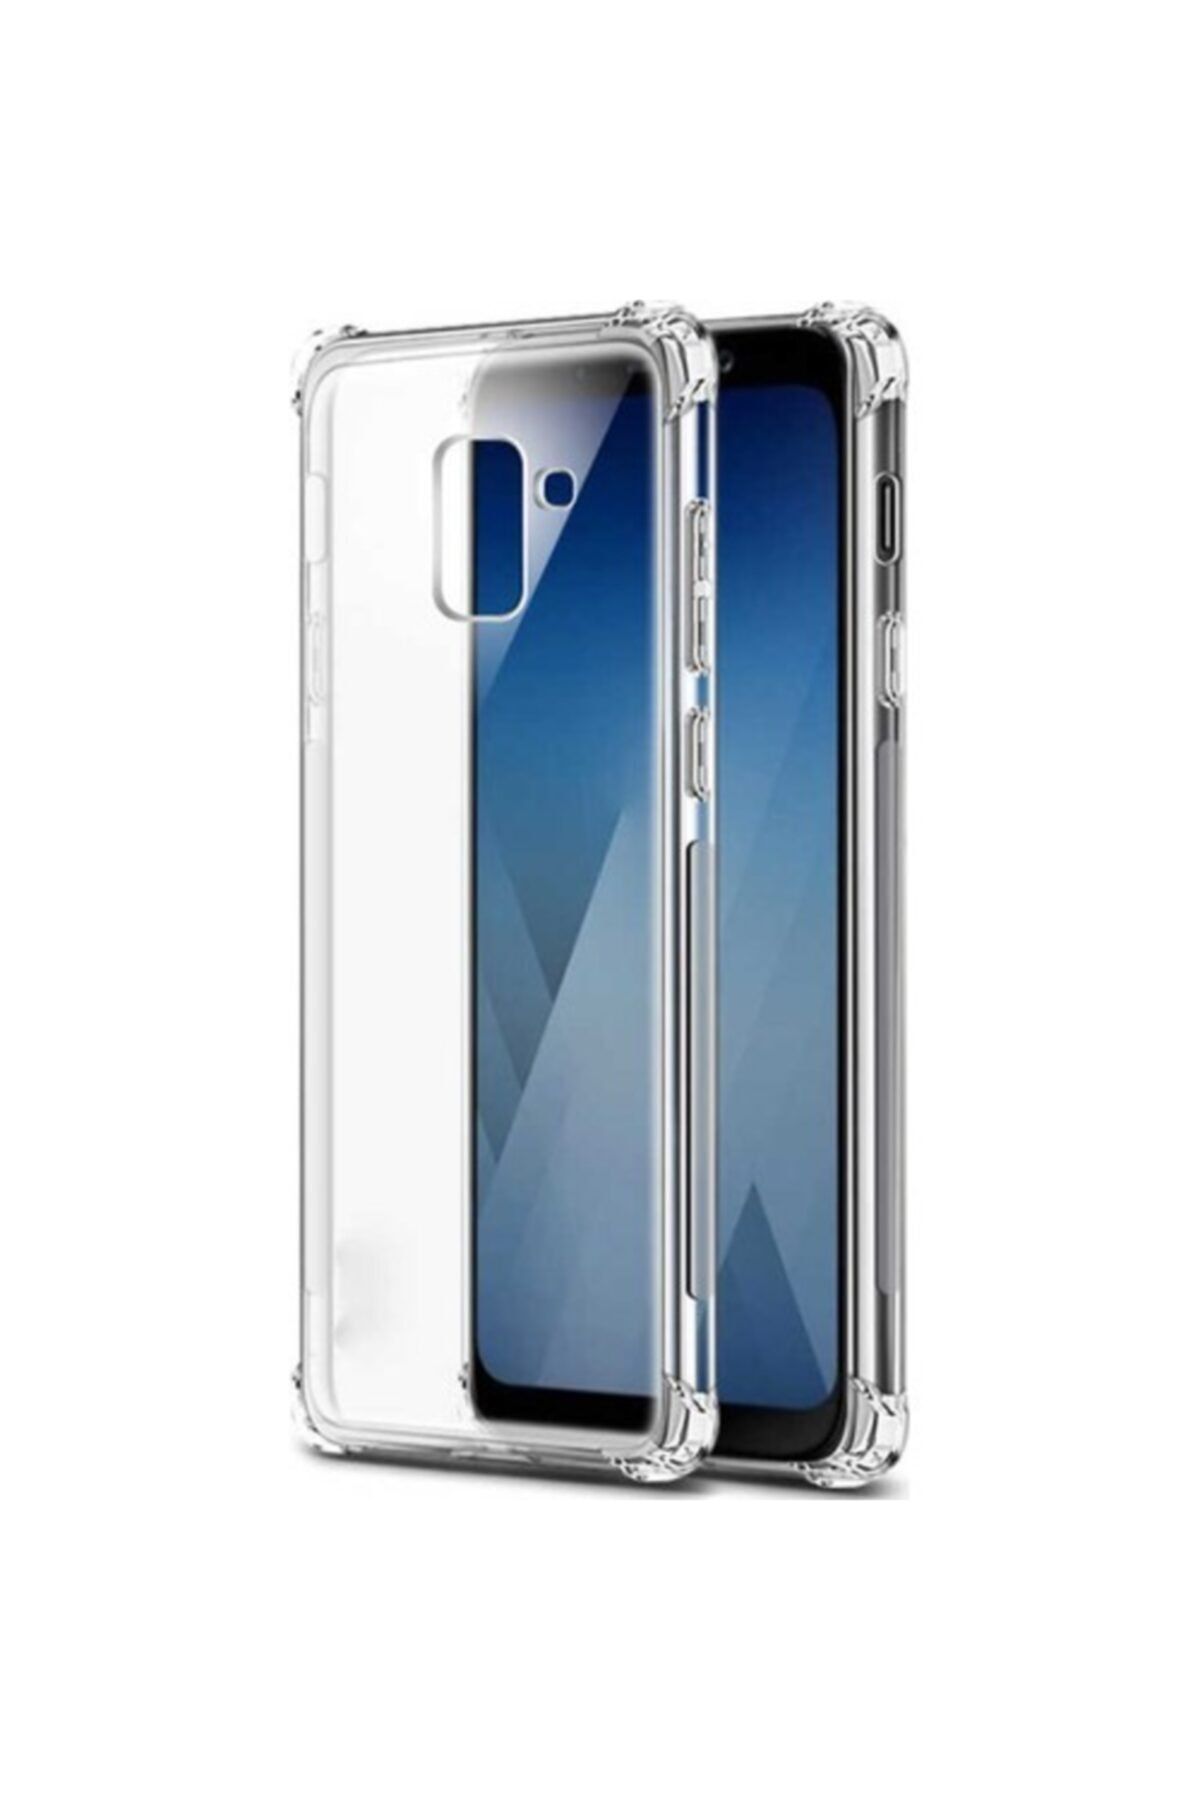 Fibaks Samsung Galaxy J4 Plus Kılıf Crystal Sert Pc Antishock Darbe Emici Kenar Şeffaf Silikon Kapak